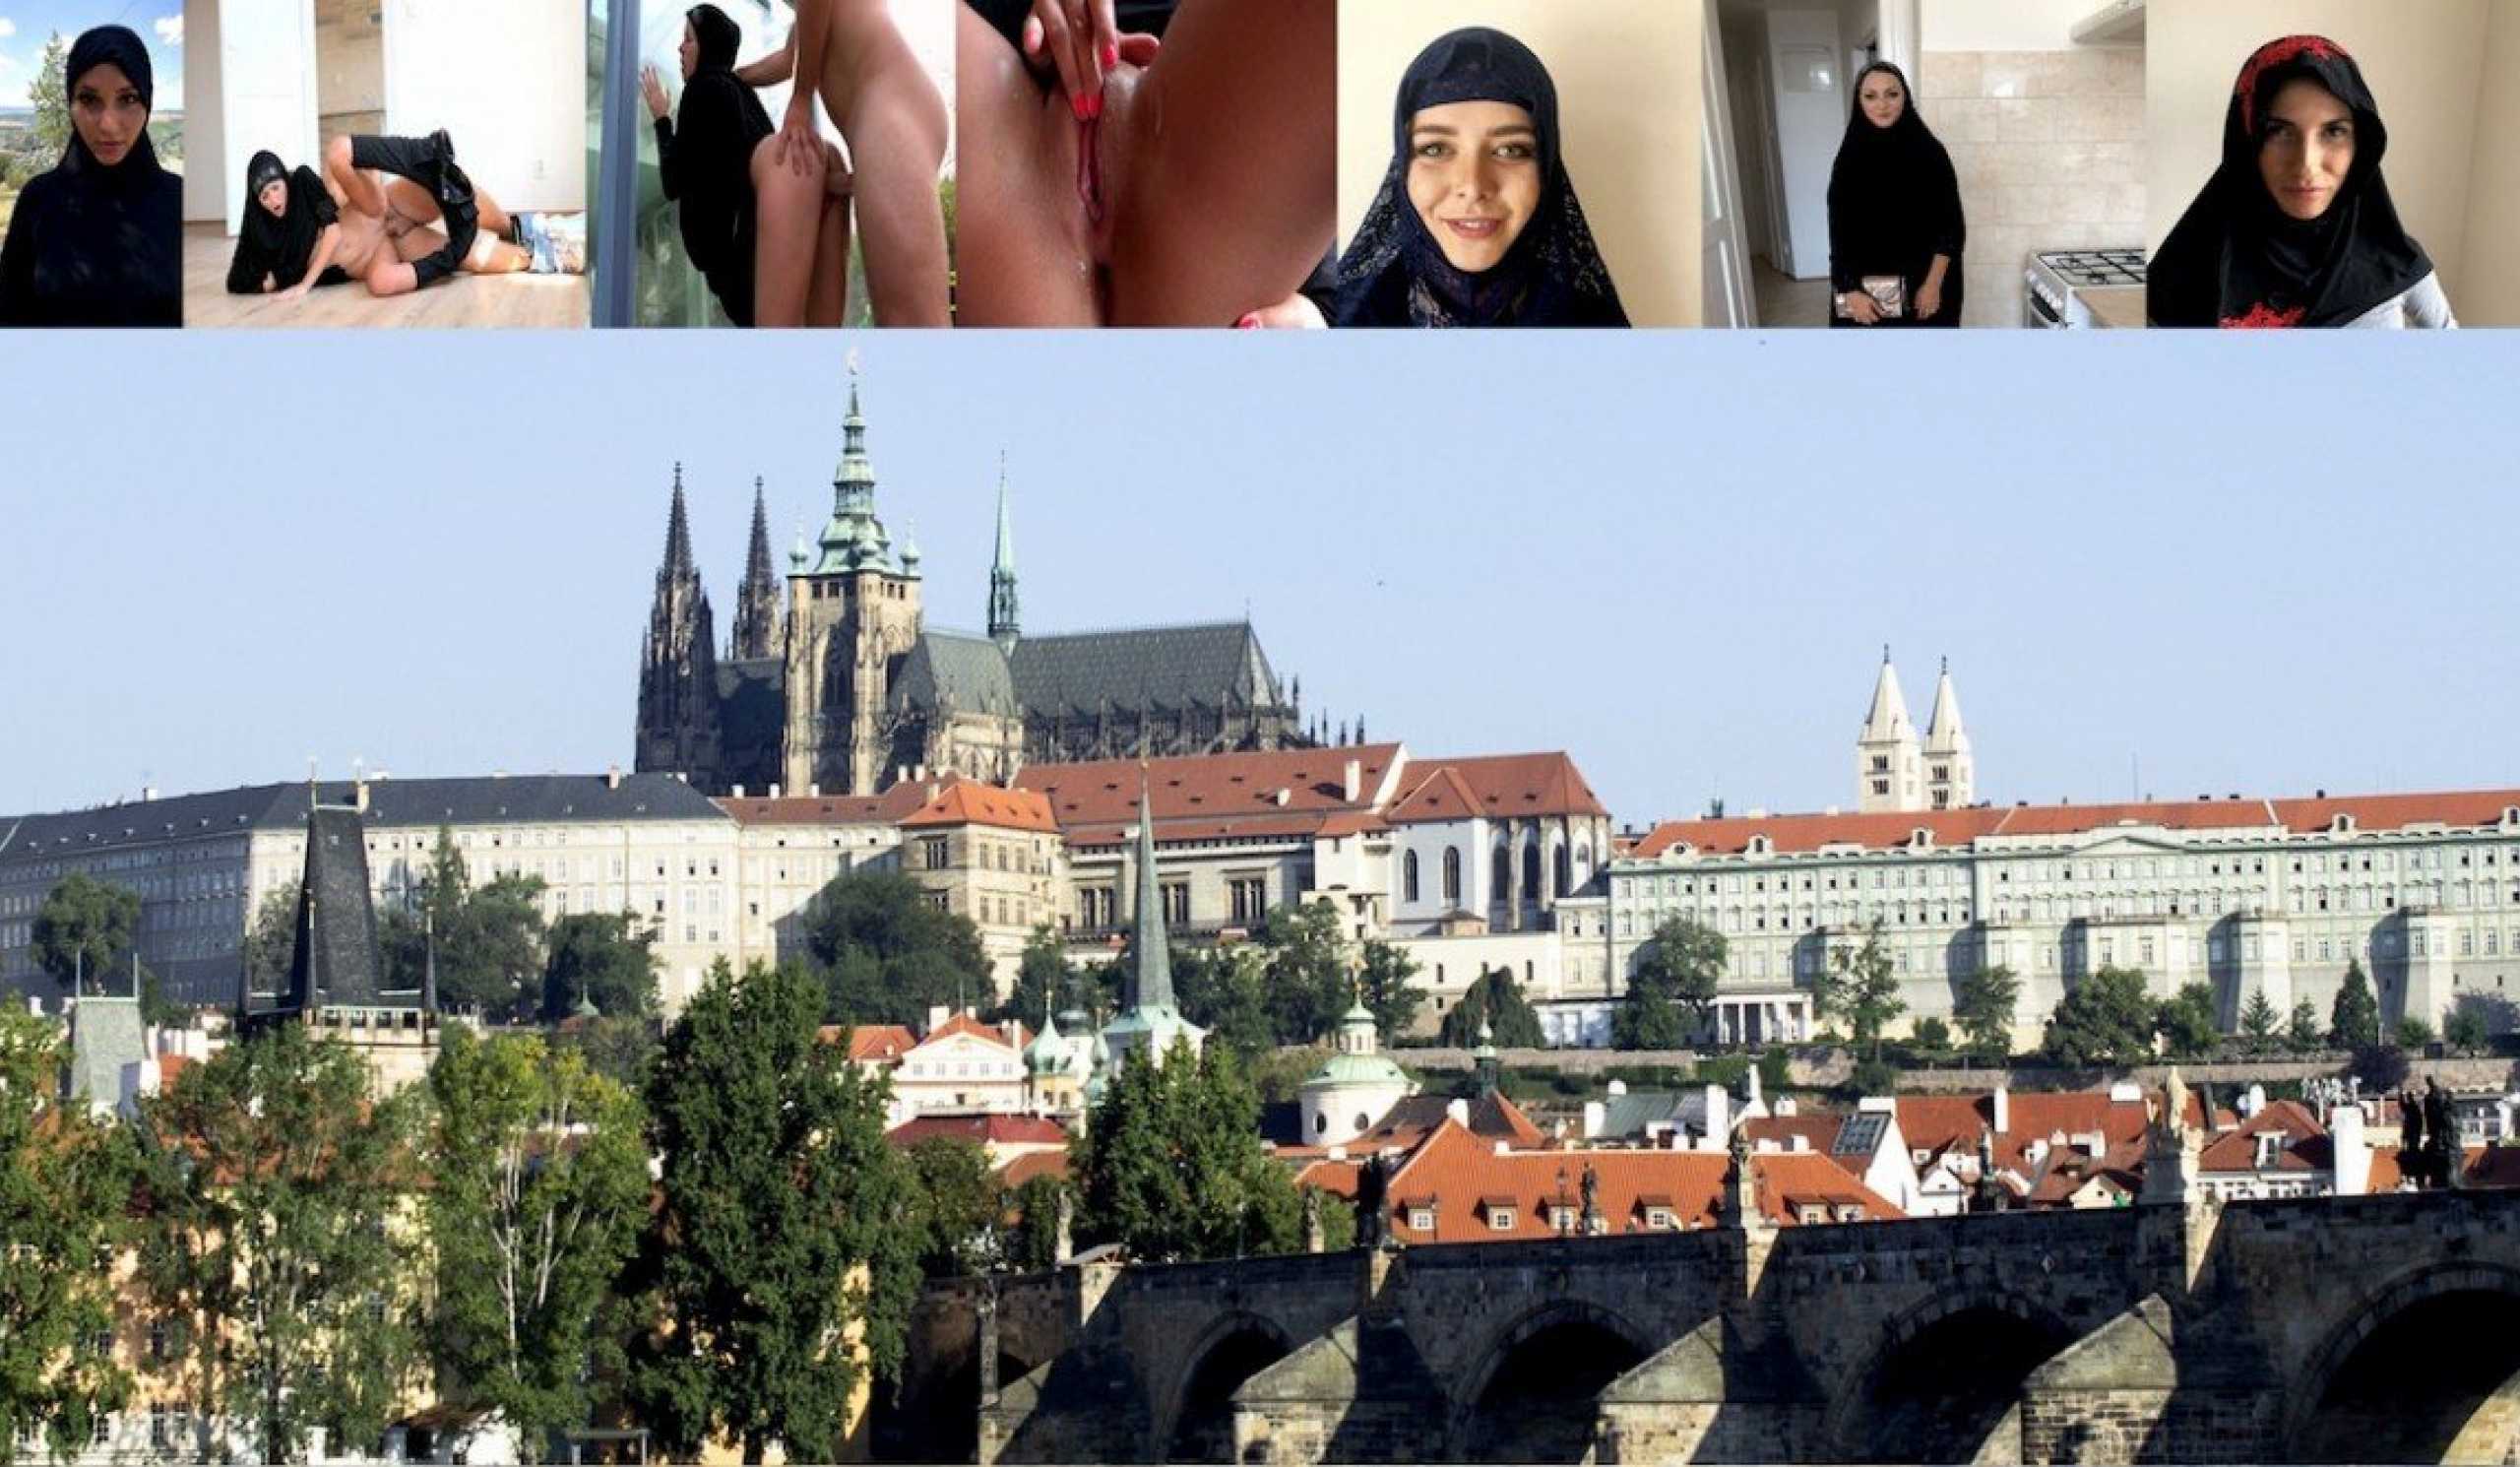 Musalim Xxx Video Hd Download - Czech muslim girl fucking hard | Sex With Muslims